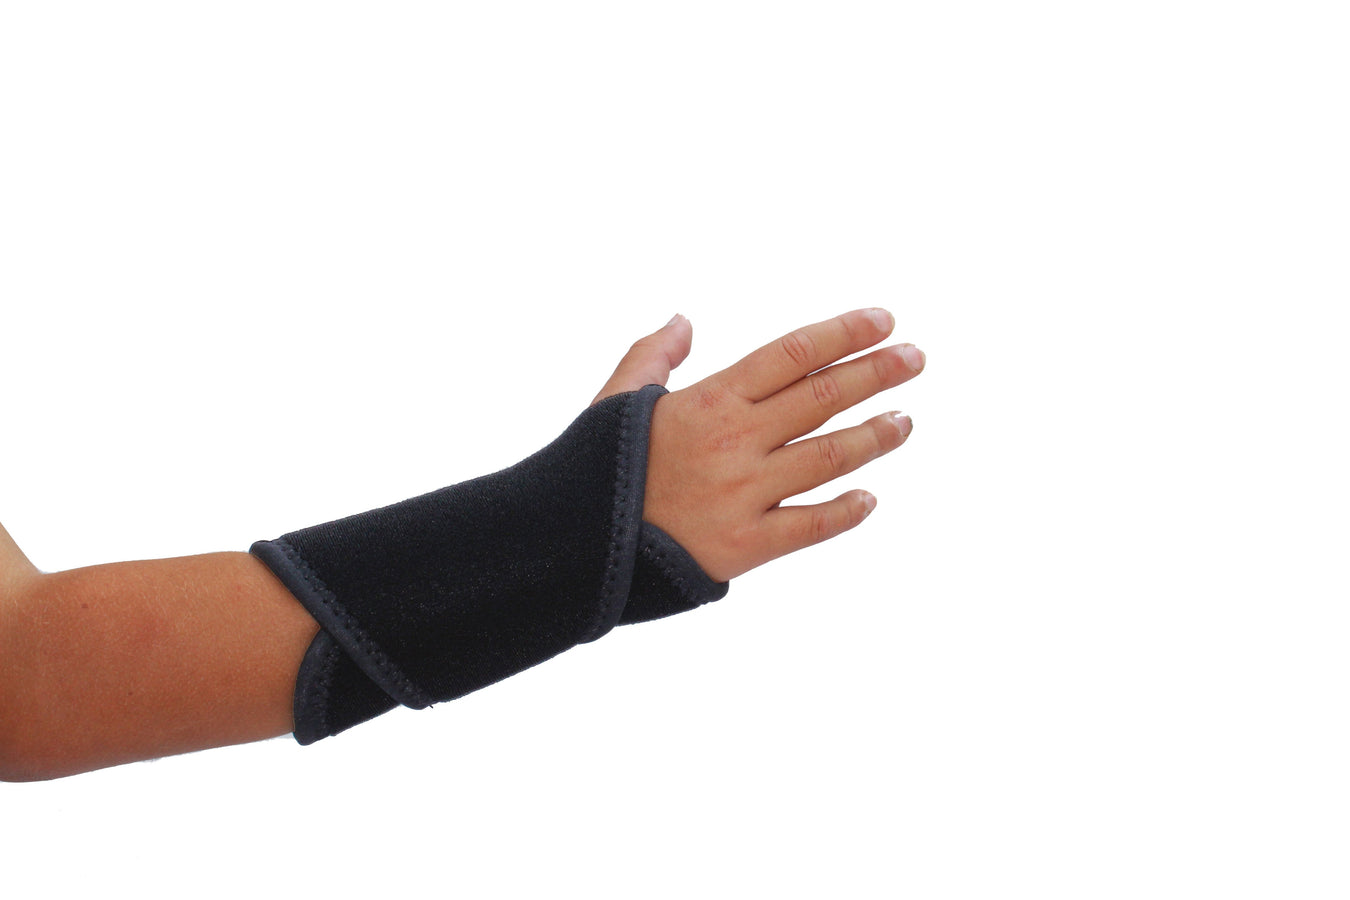 Orthopedics/Sleeves & Wraps